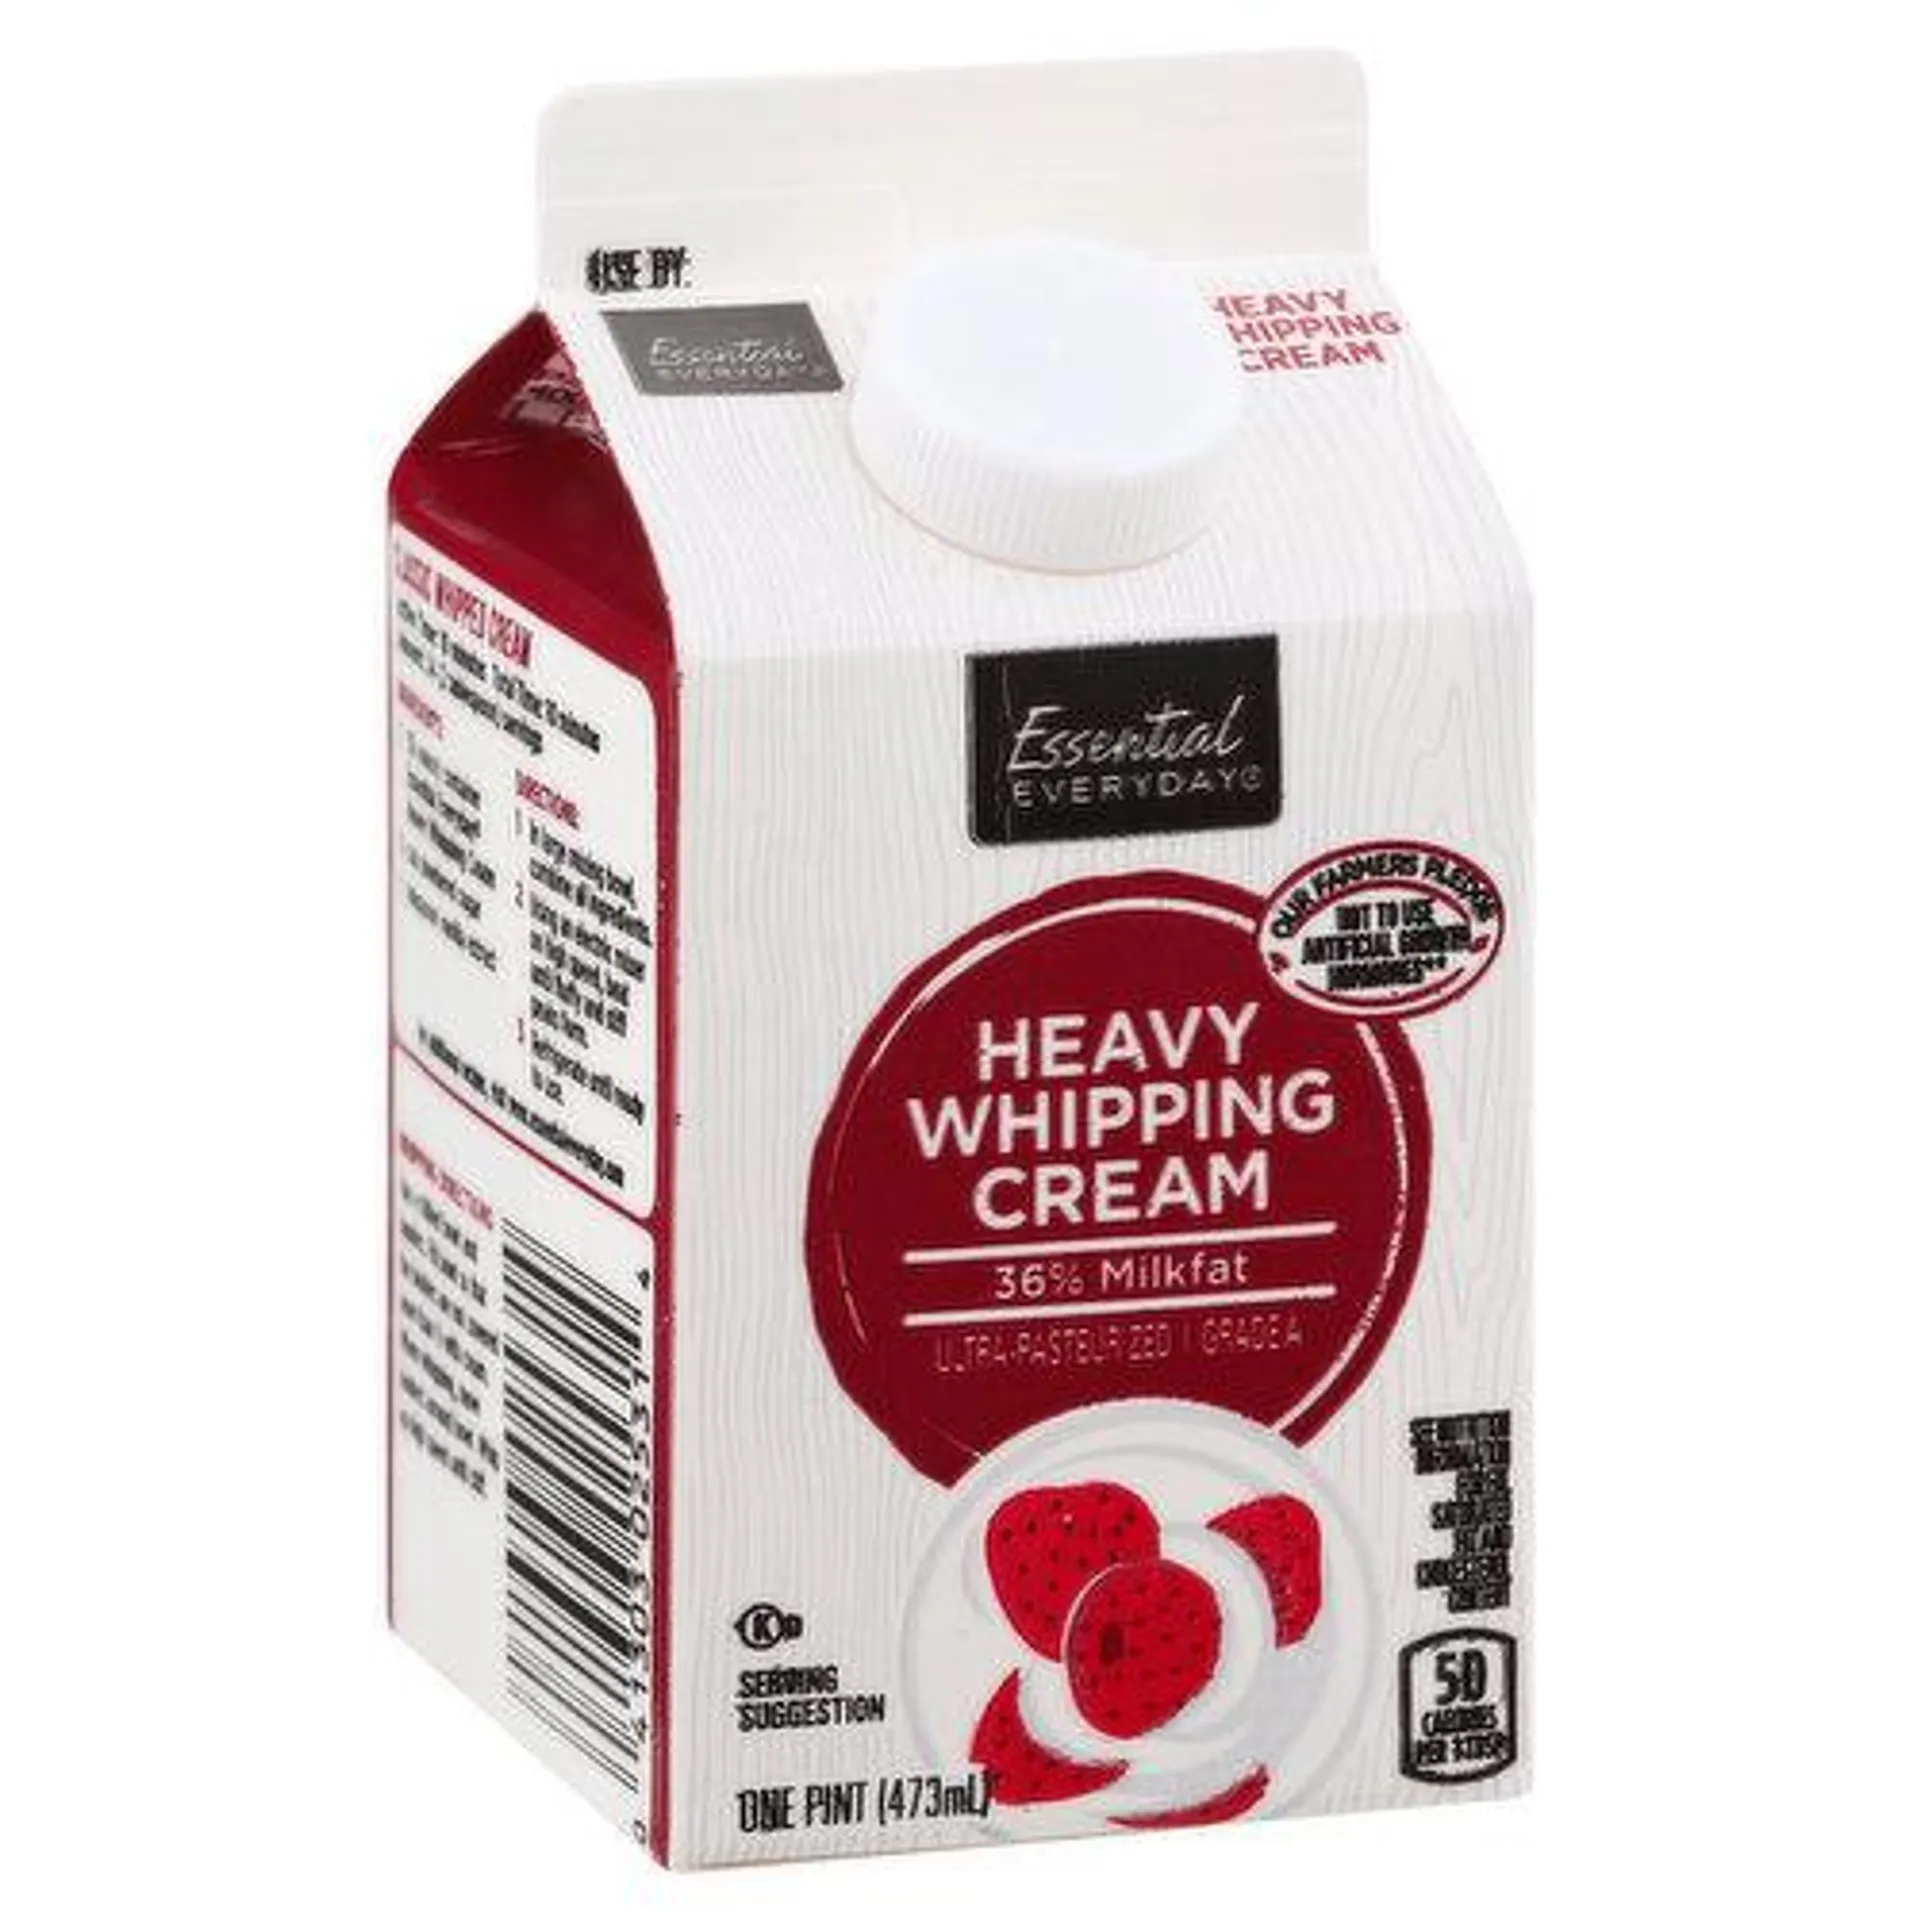 Essential Everyday Whipping Cream, Heavy, 36% Milkfat, 1 Pint